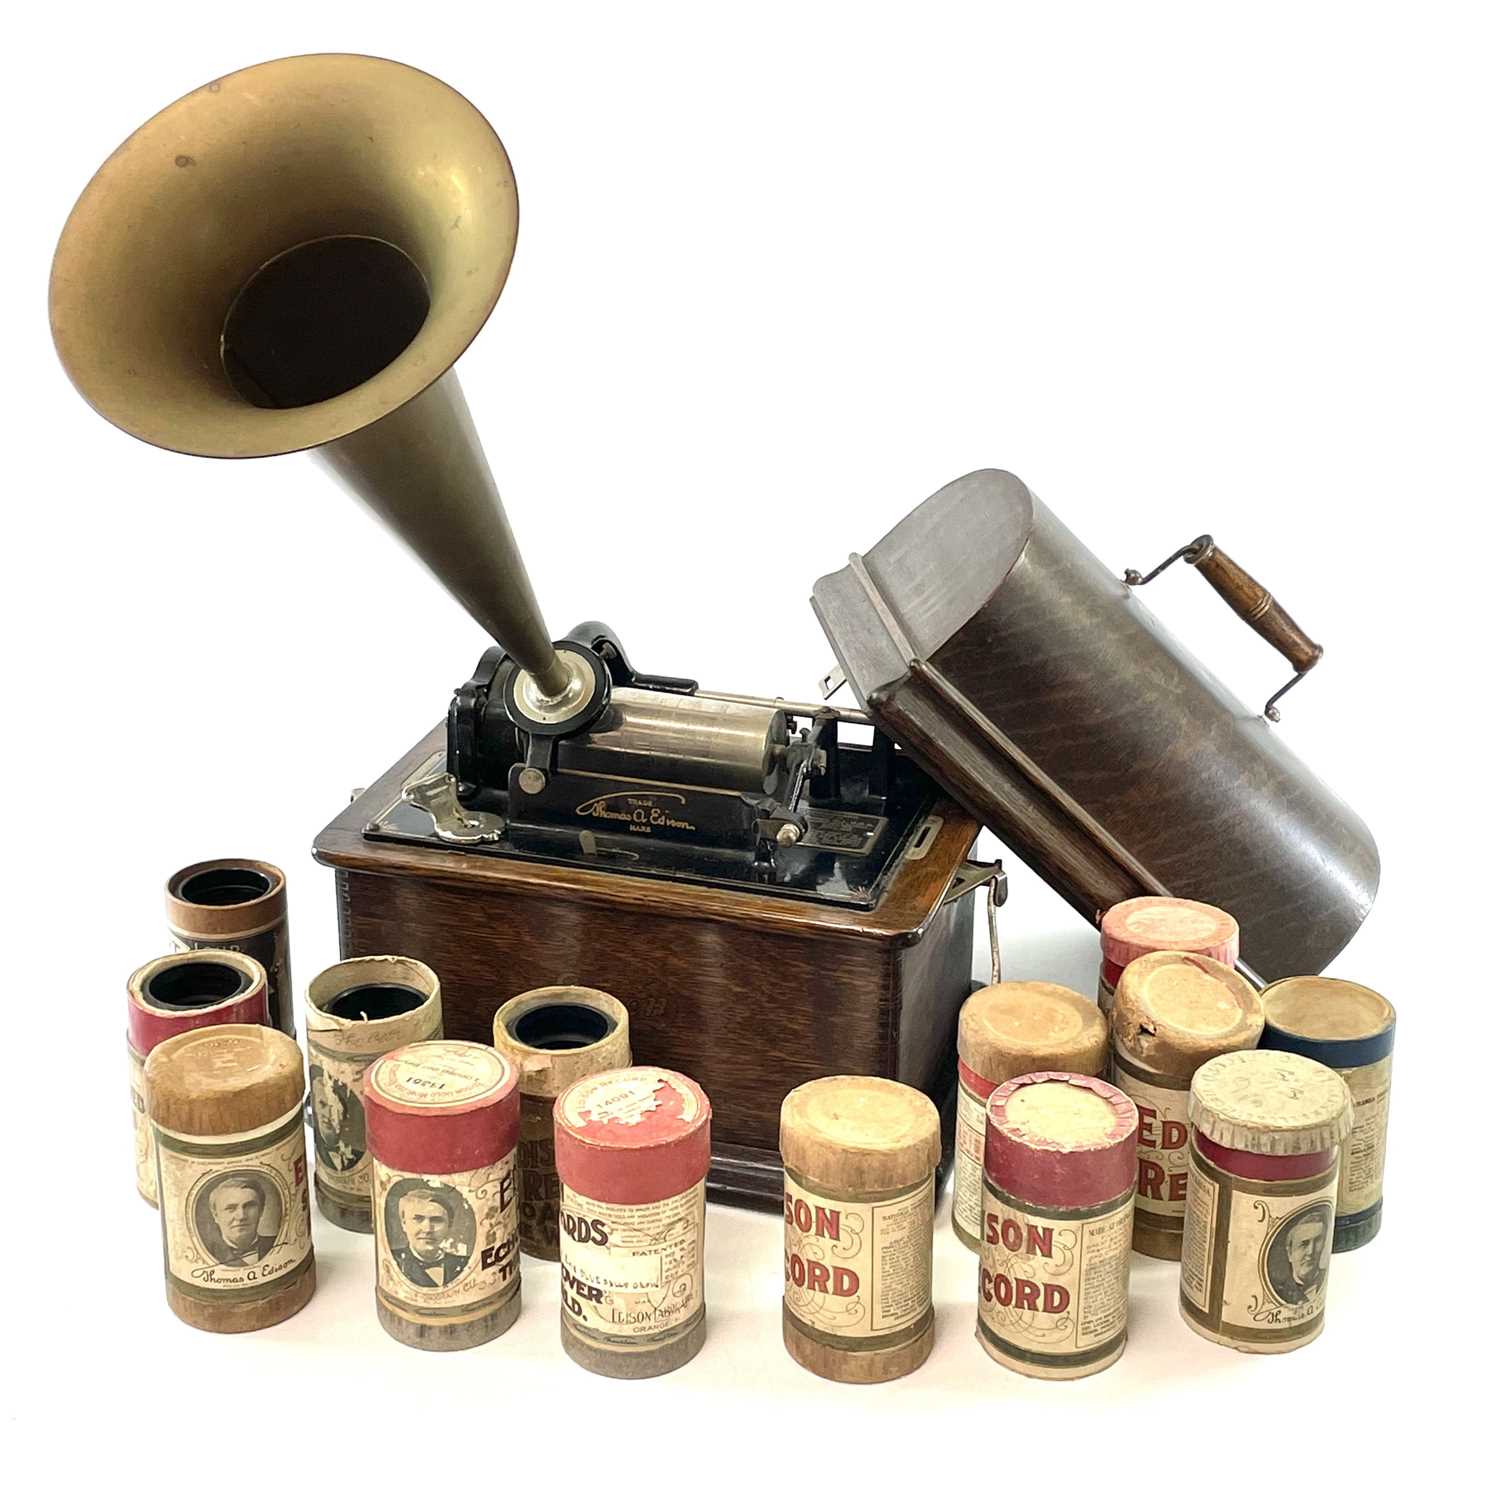 Lot 5 - An Edison Standard Phonograph, serial number...